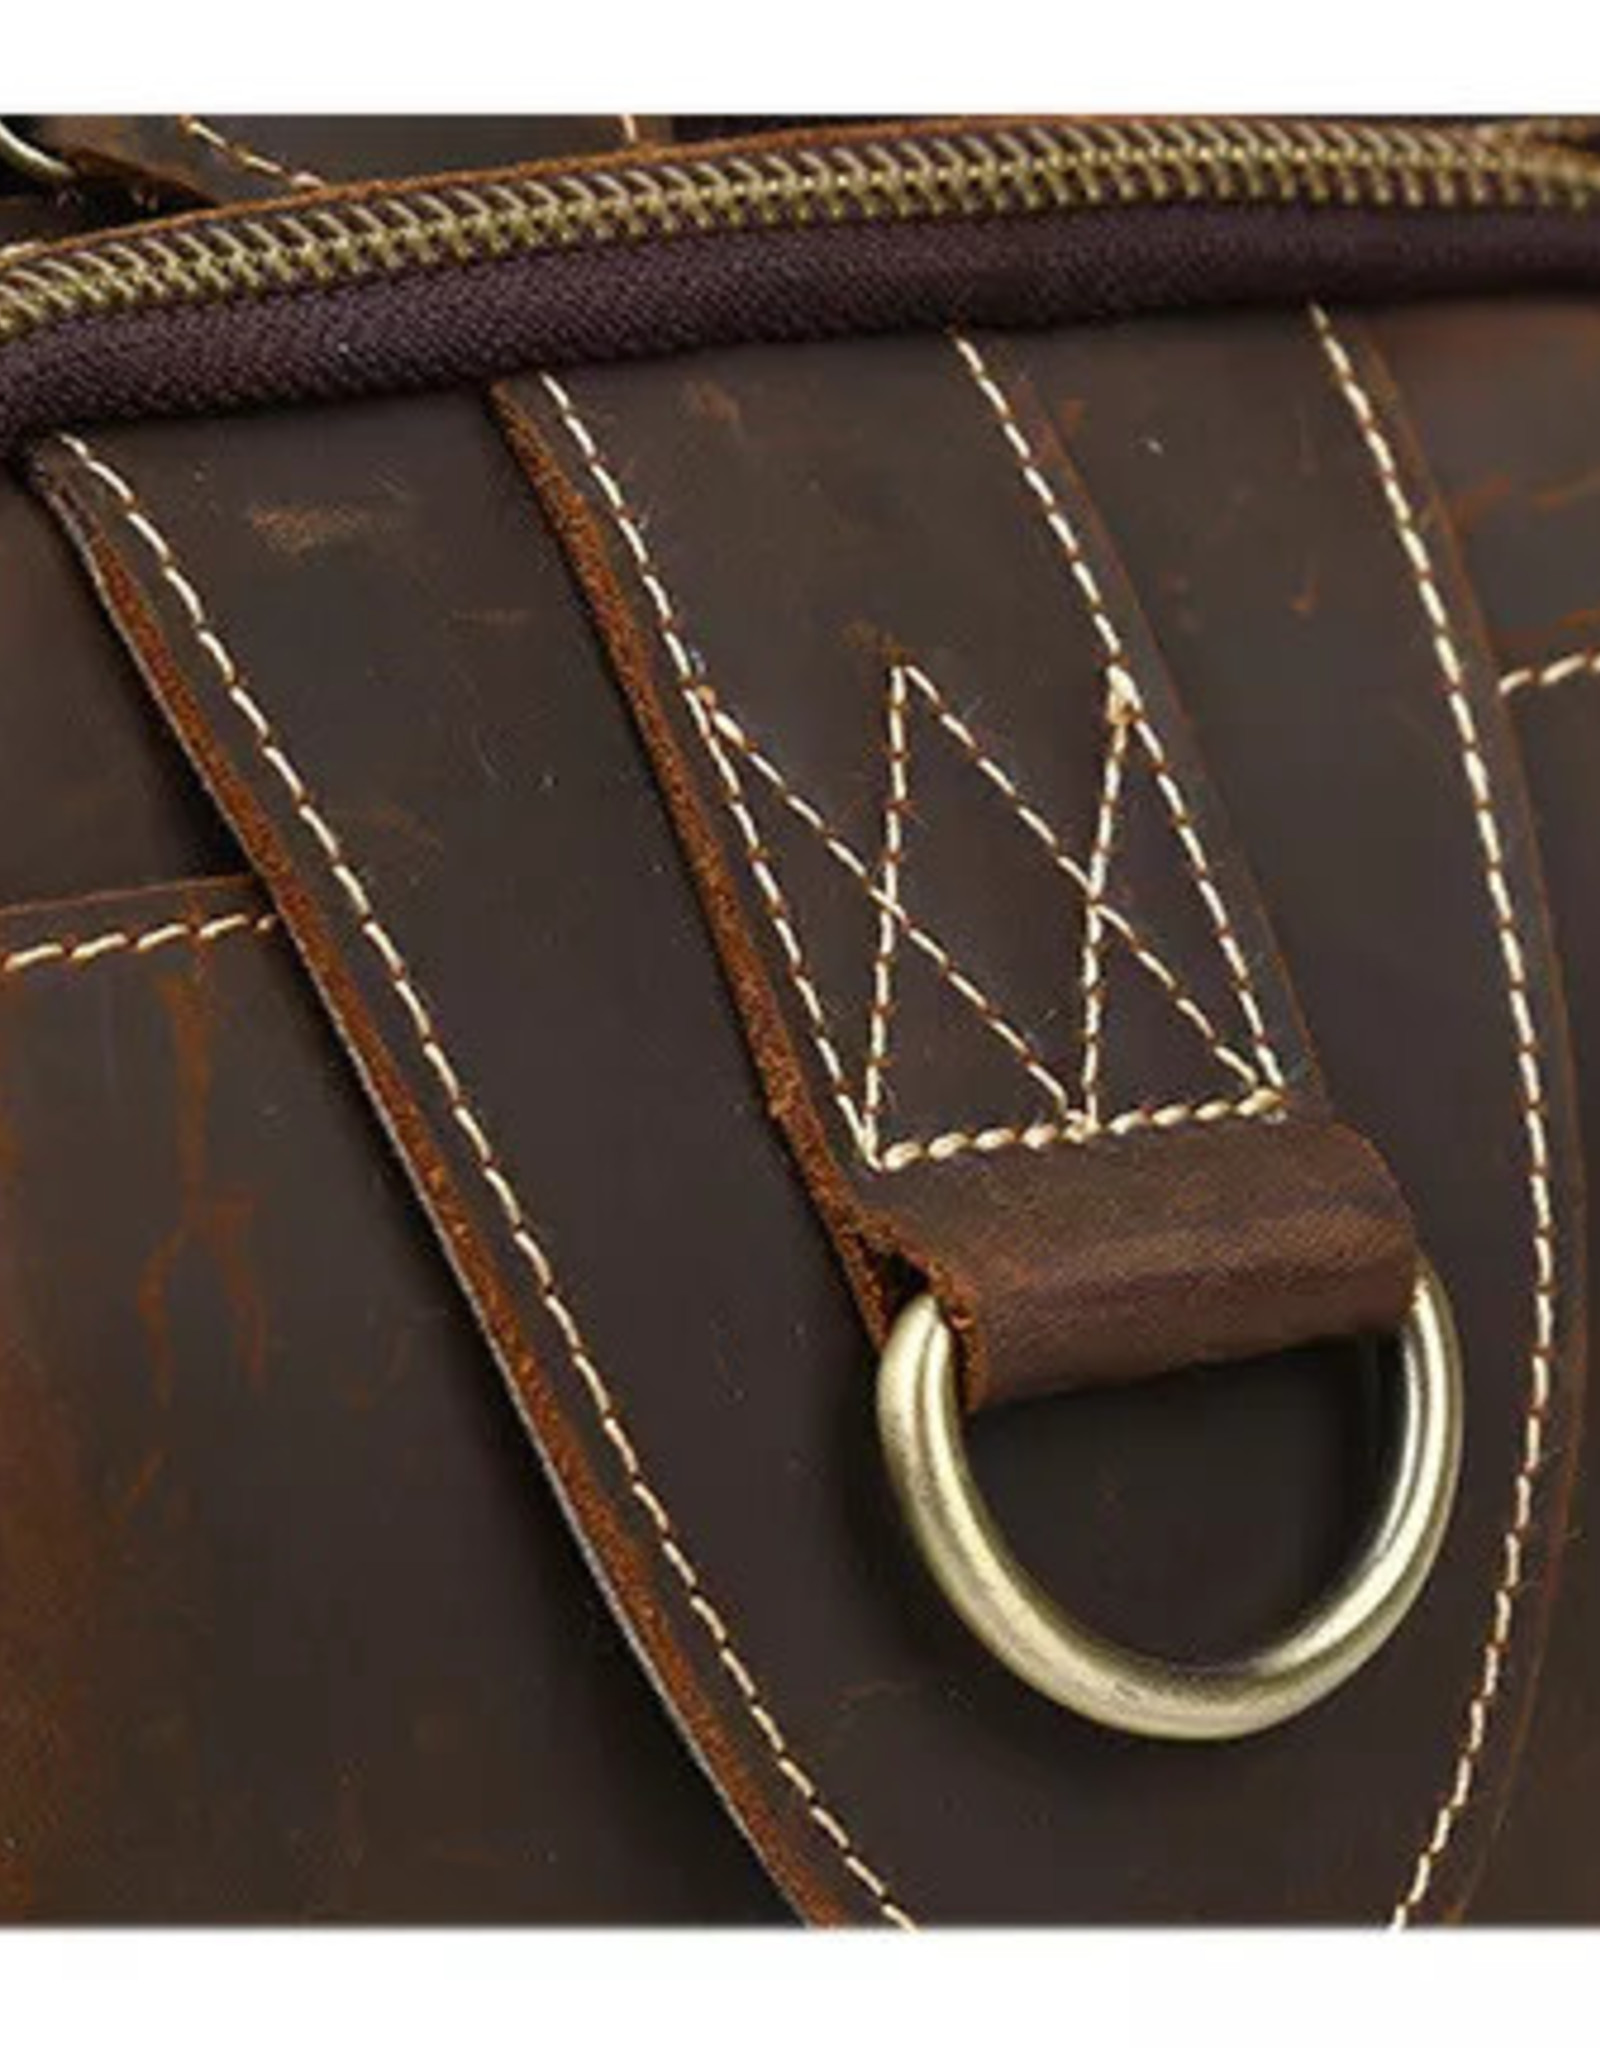 Thiago Waist Bag Genuine Leather